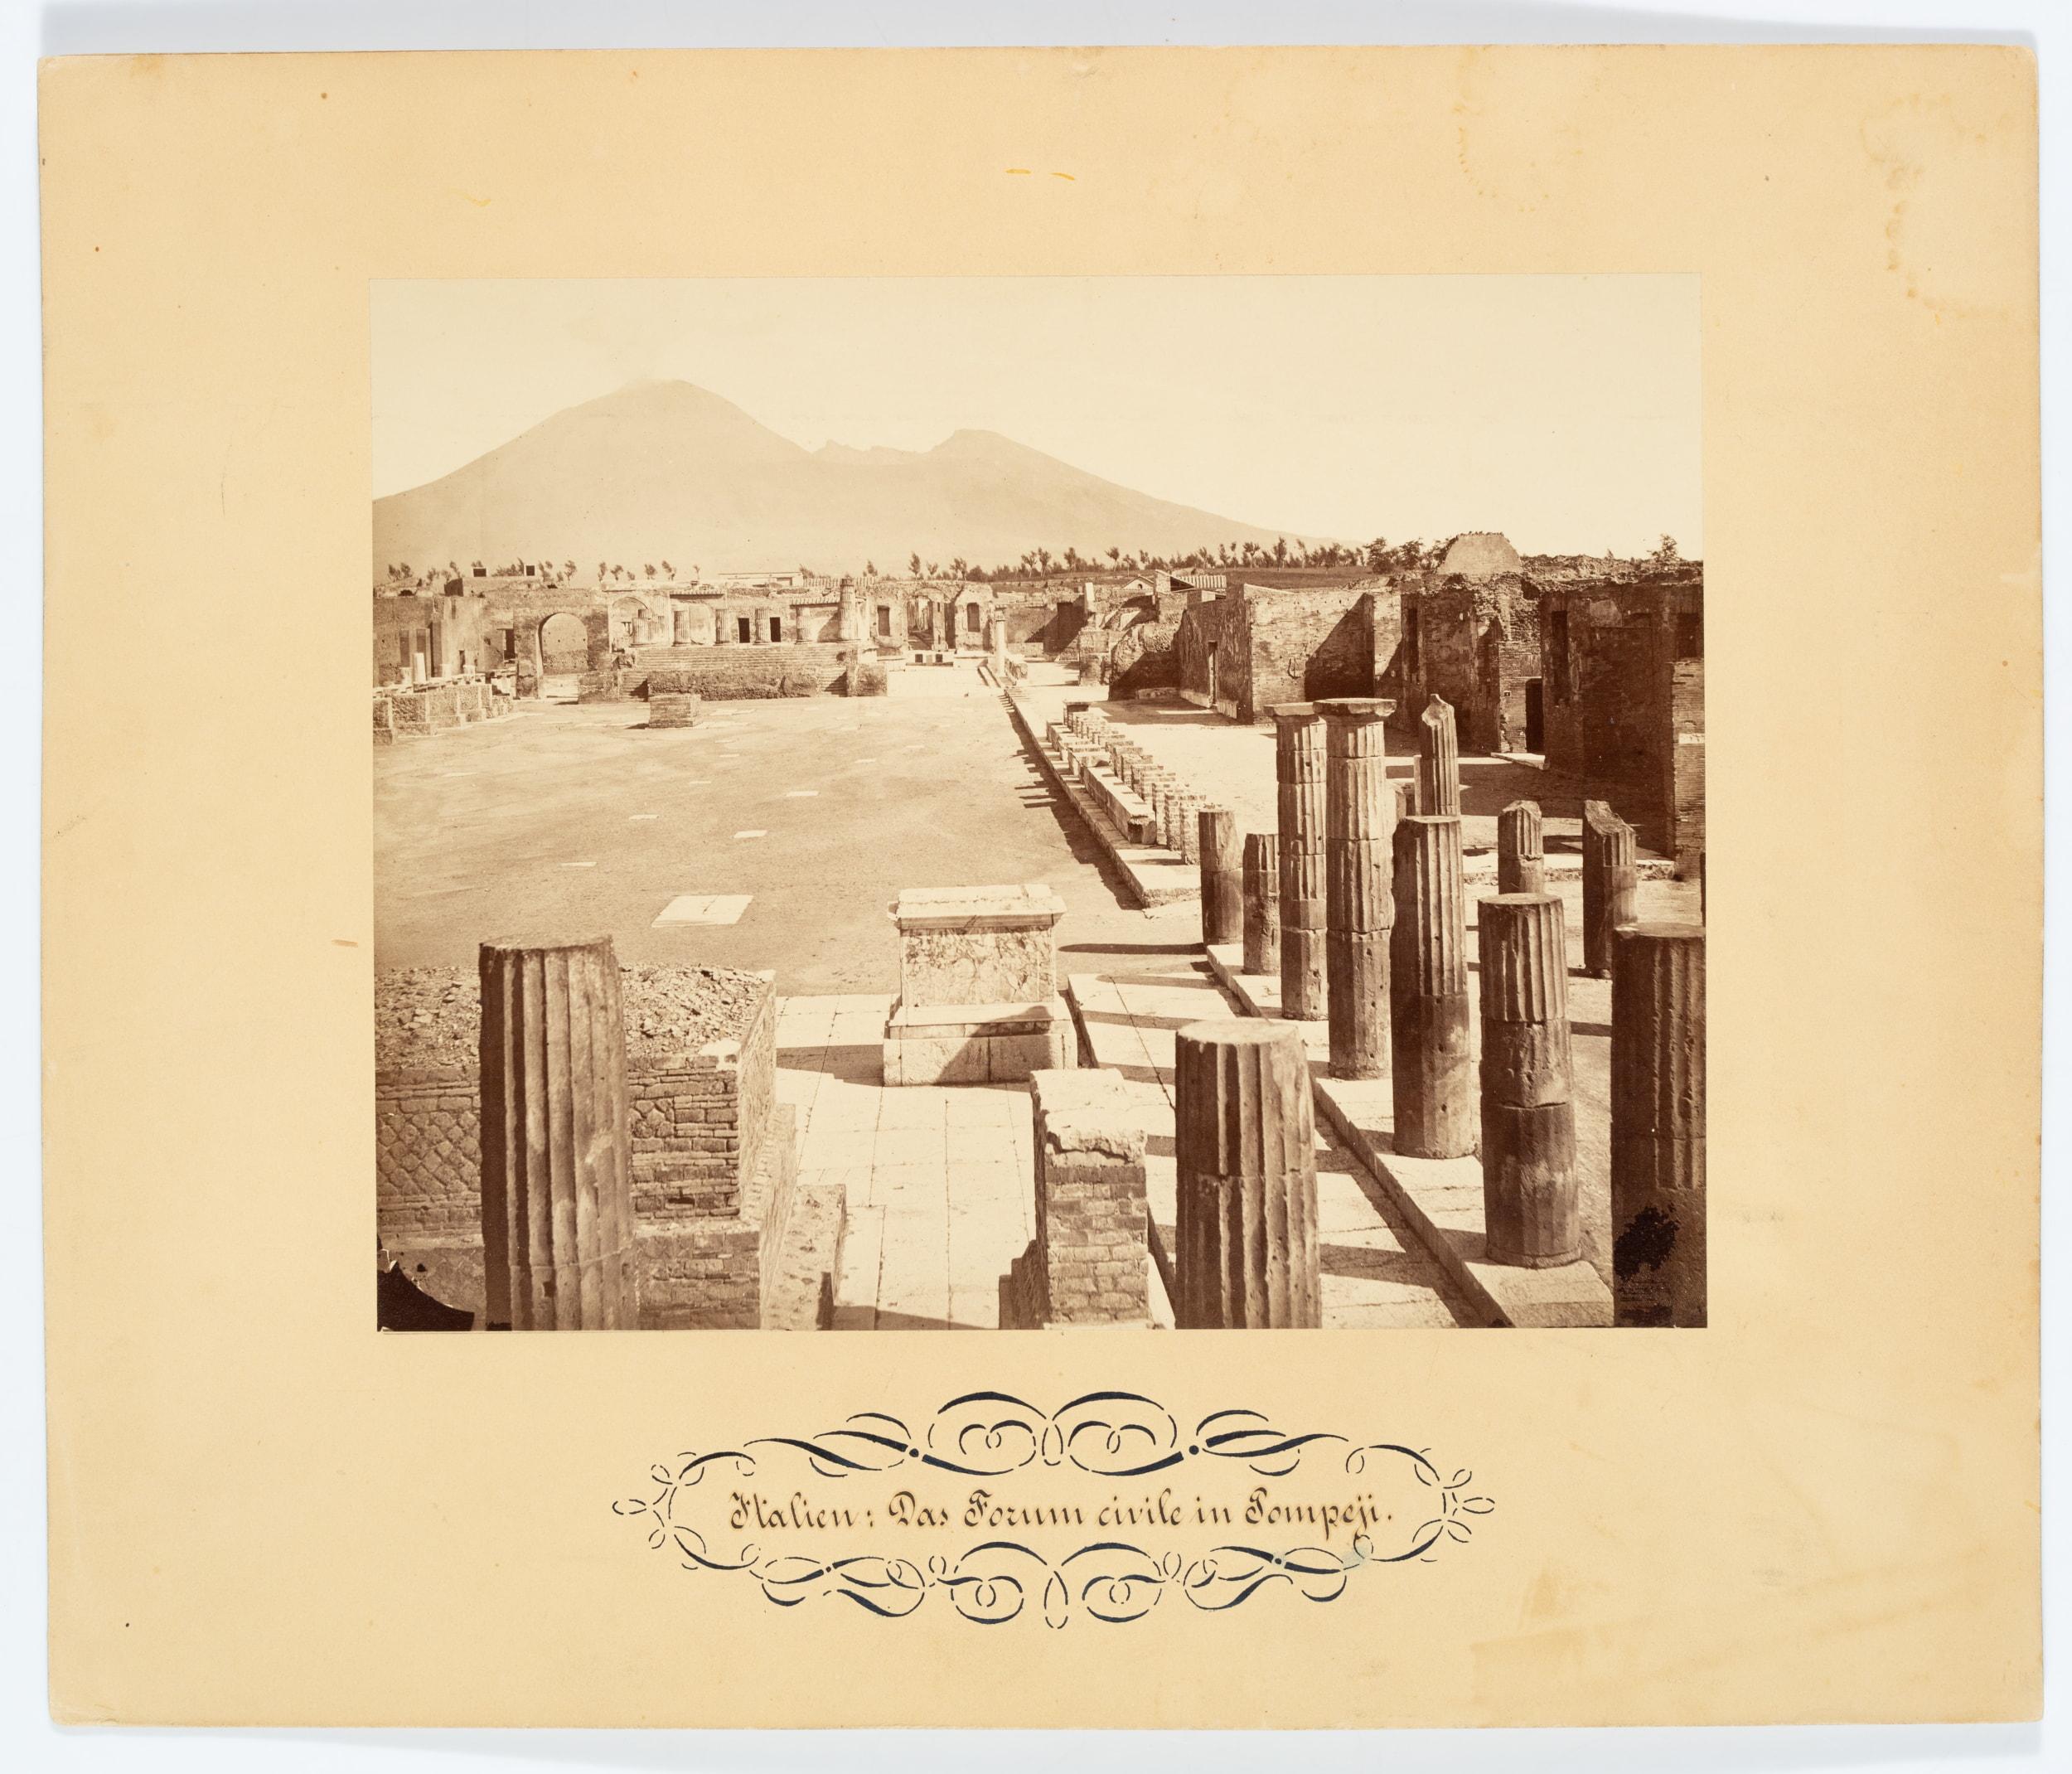 Forum civile, Pompei For Sale 1